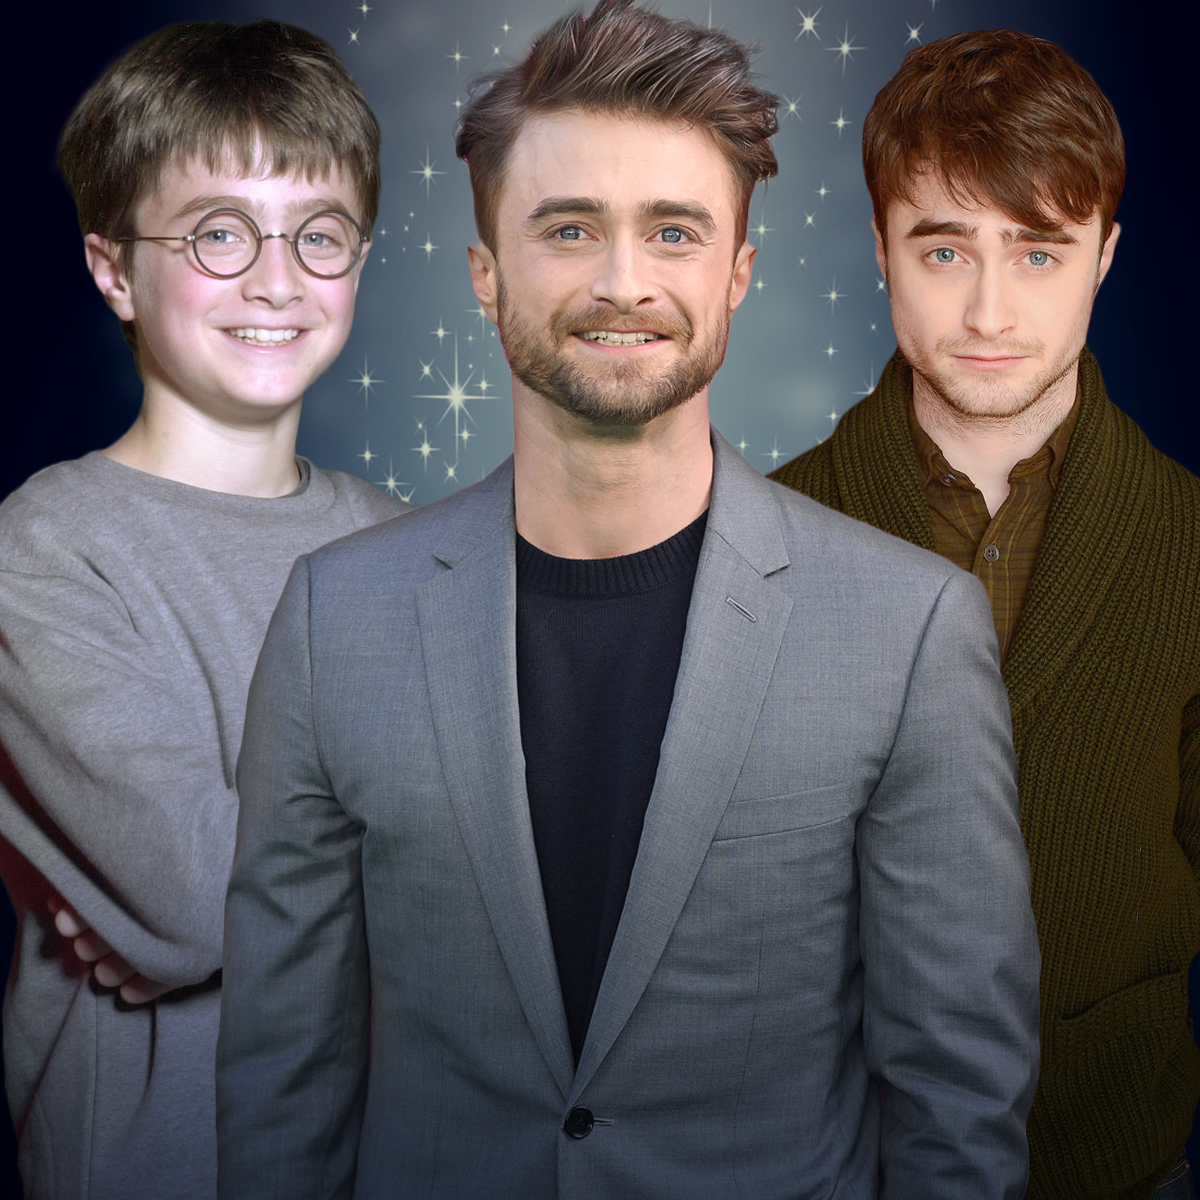 Daniel Radcliffe Responds To Alan Rickman's Diary Entries About Him